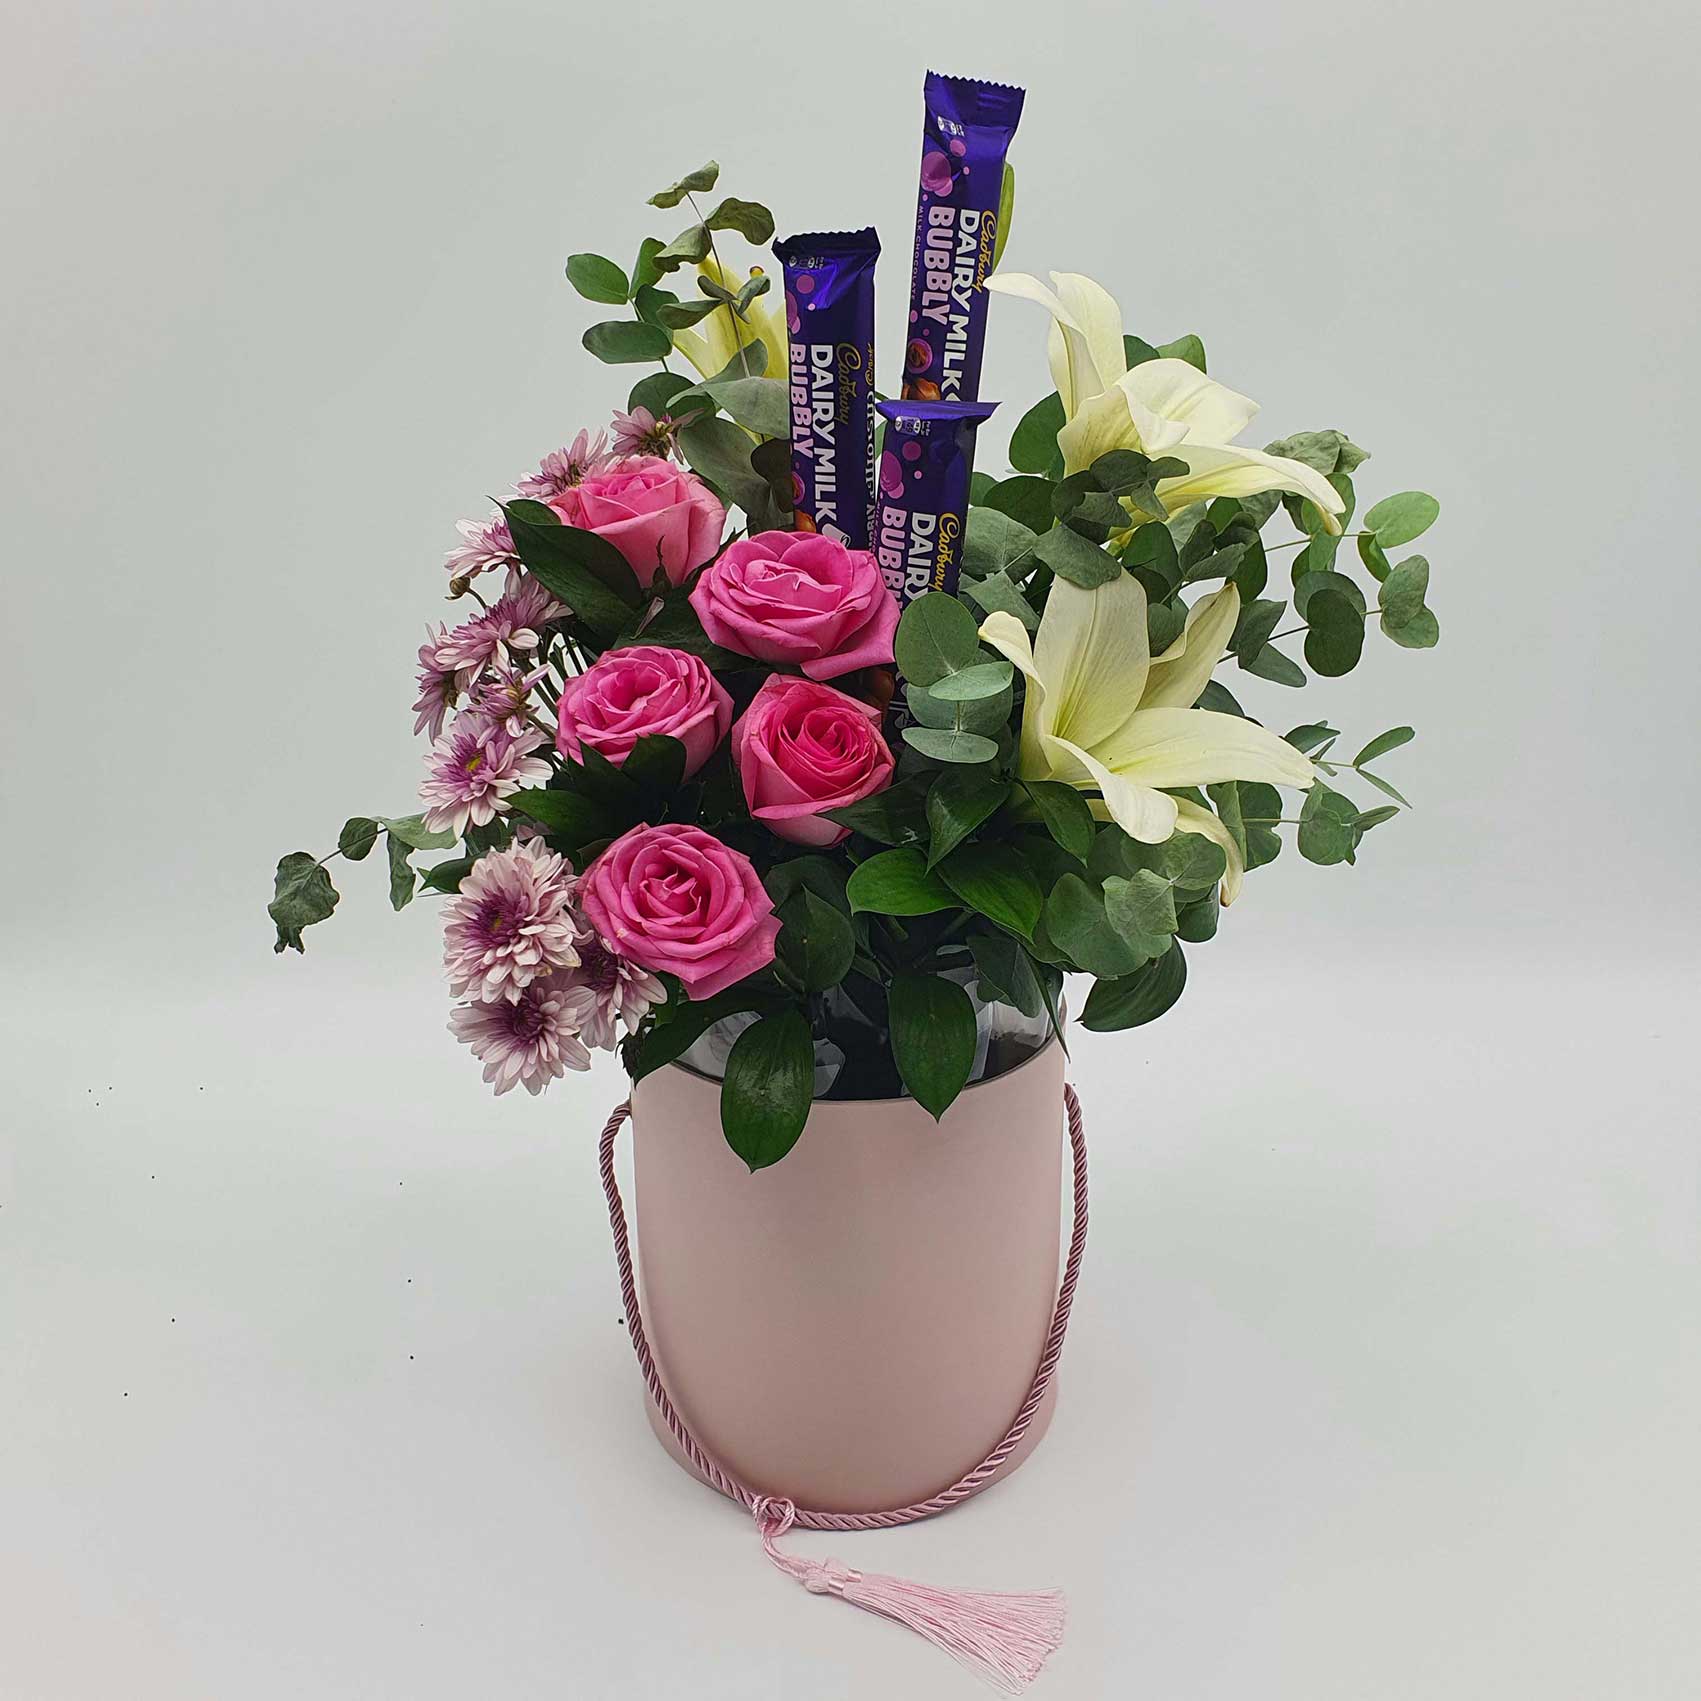 Flowers & Chocolate cylinder